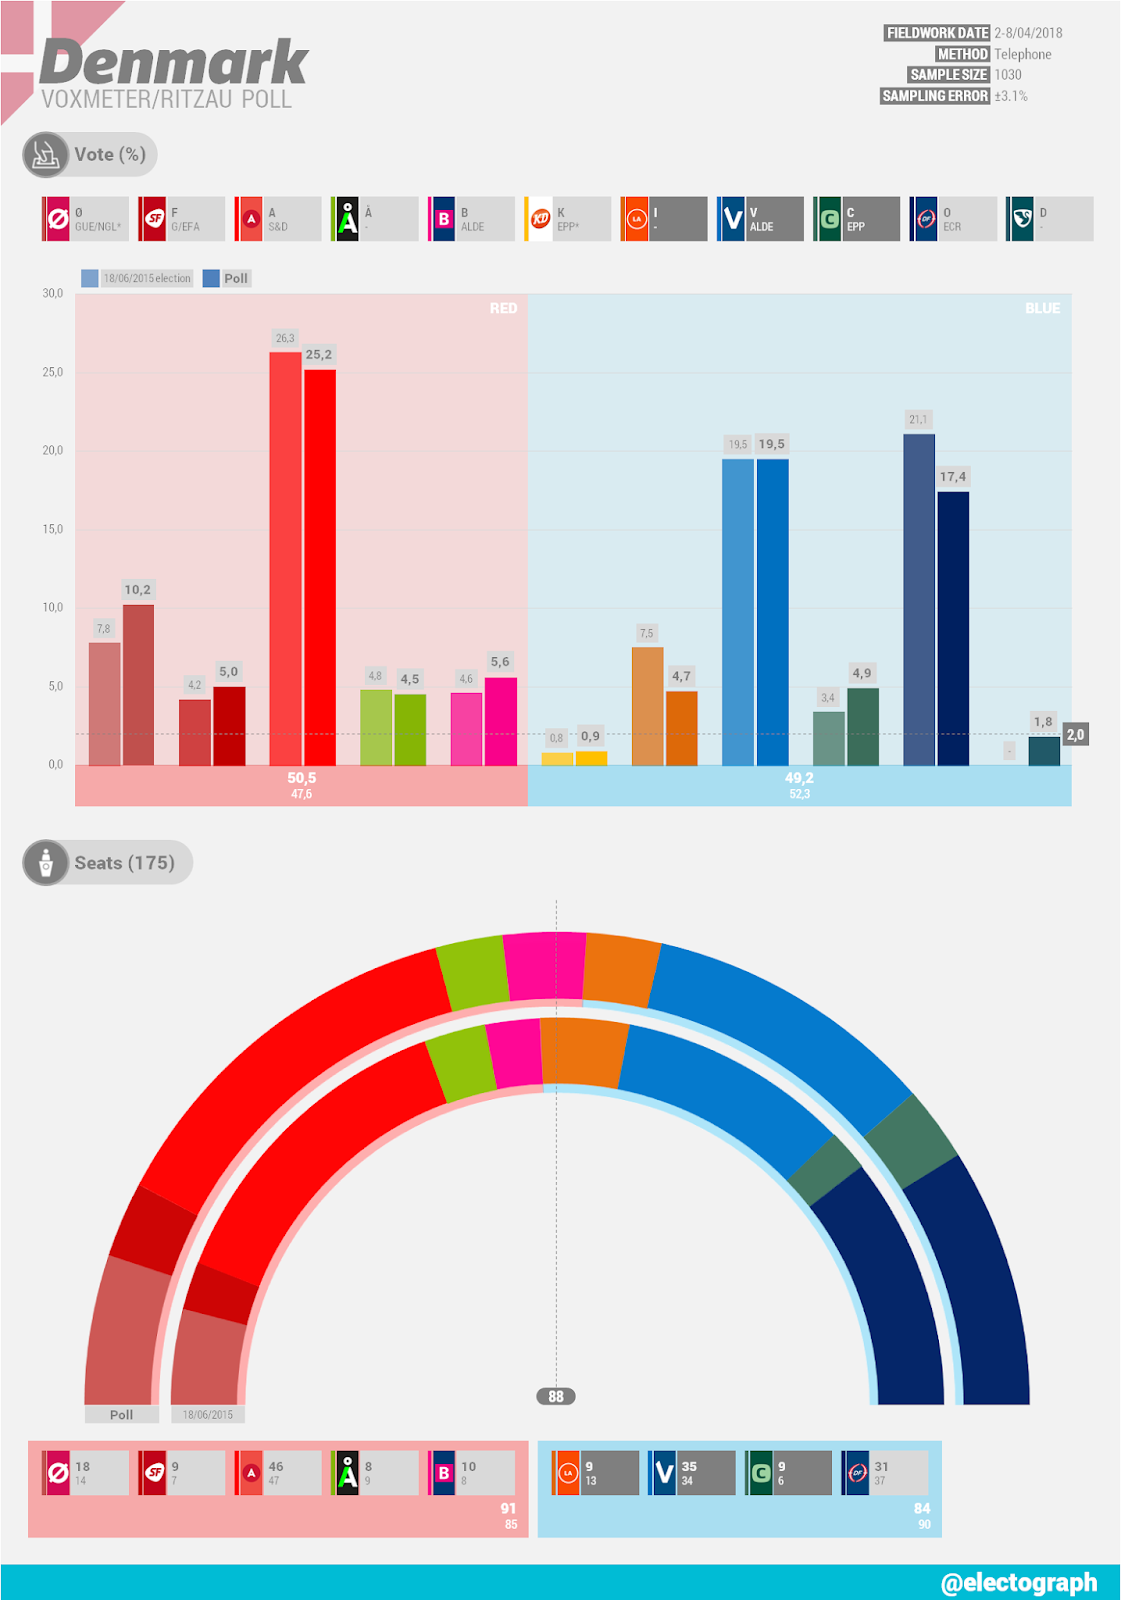 DENMARK Voxmeter poll chart for Ritzau, April 2018